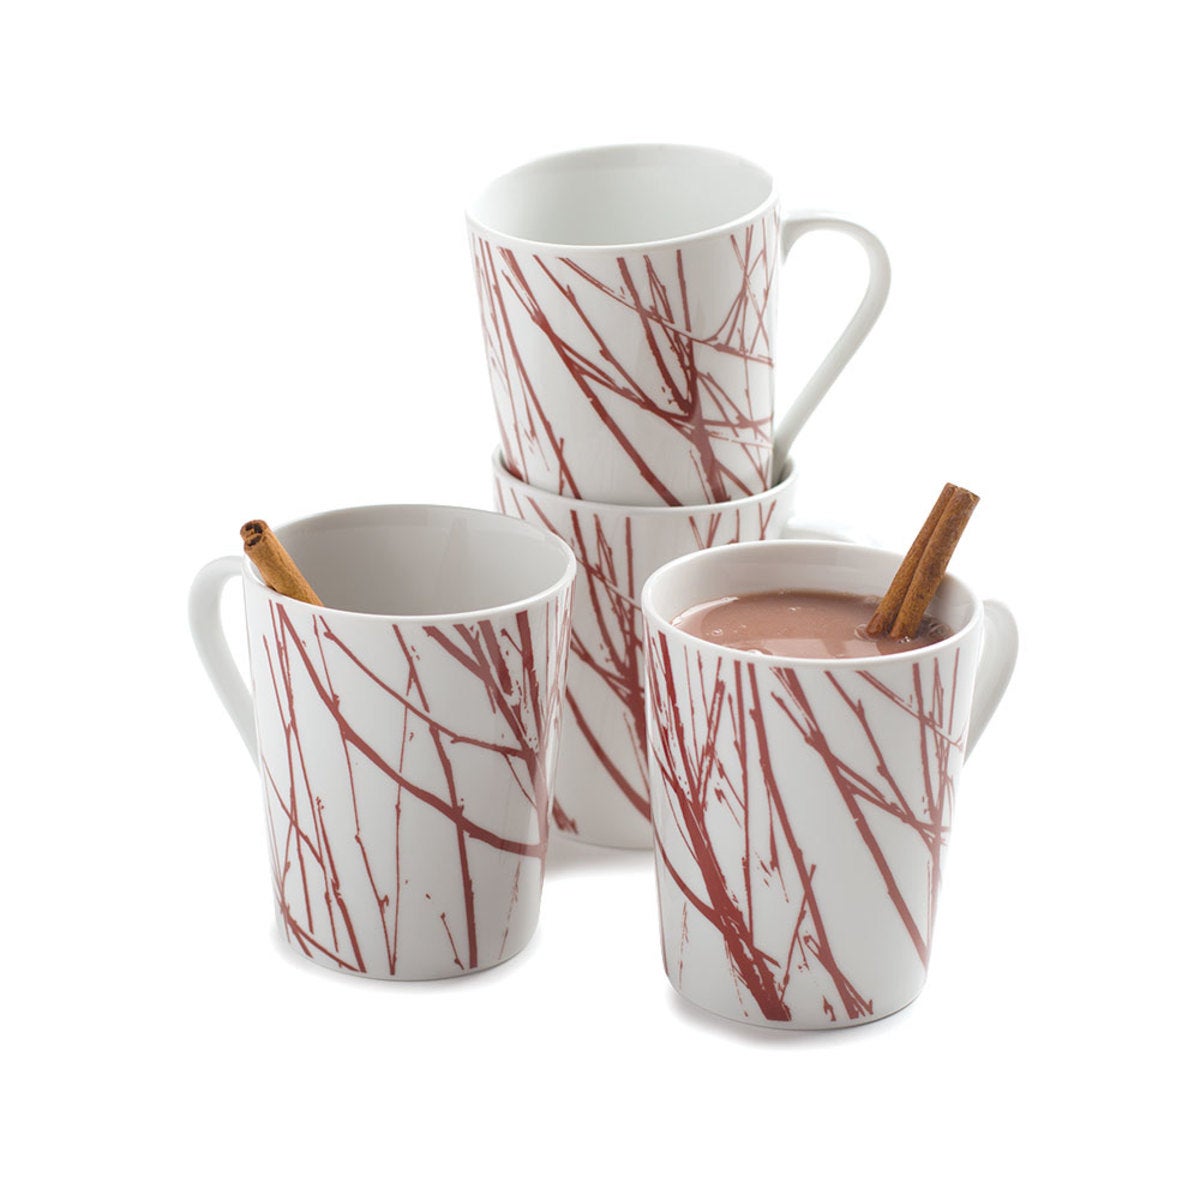 Twigg Porcelain Coffee Mug, Set of 4